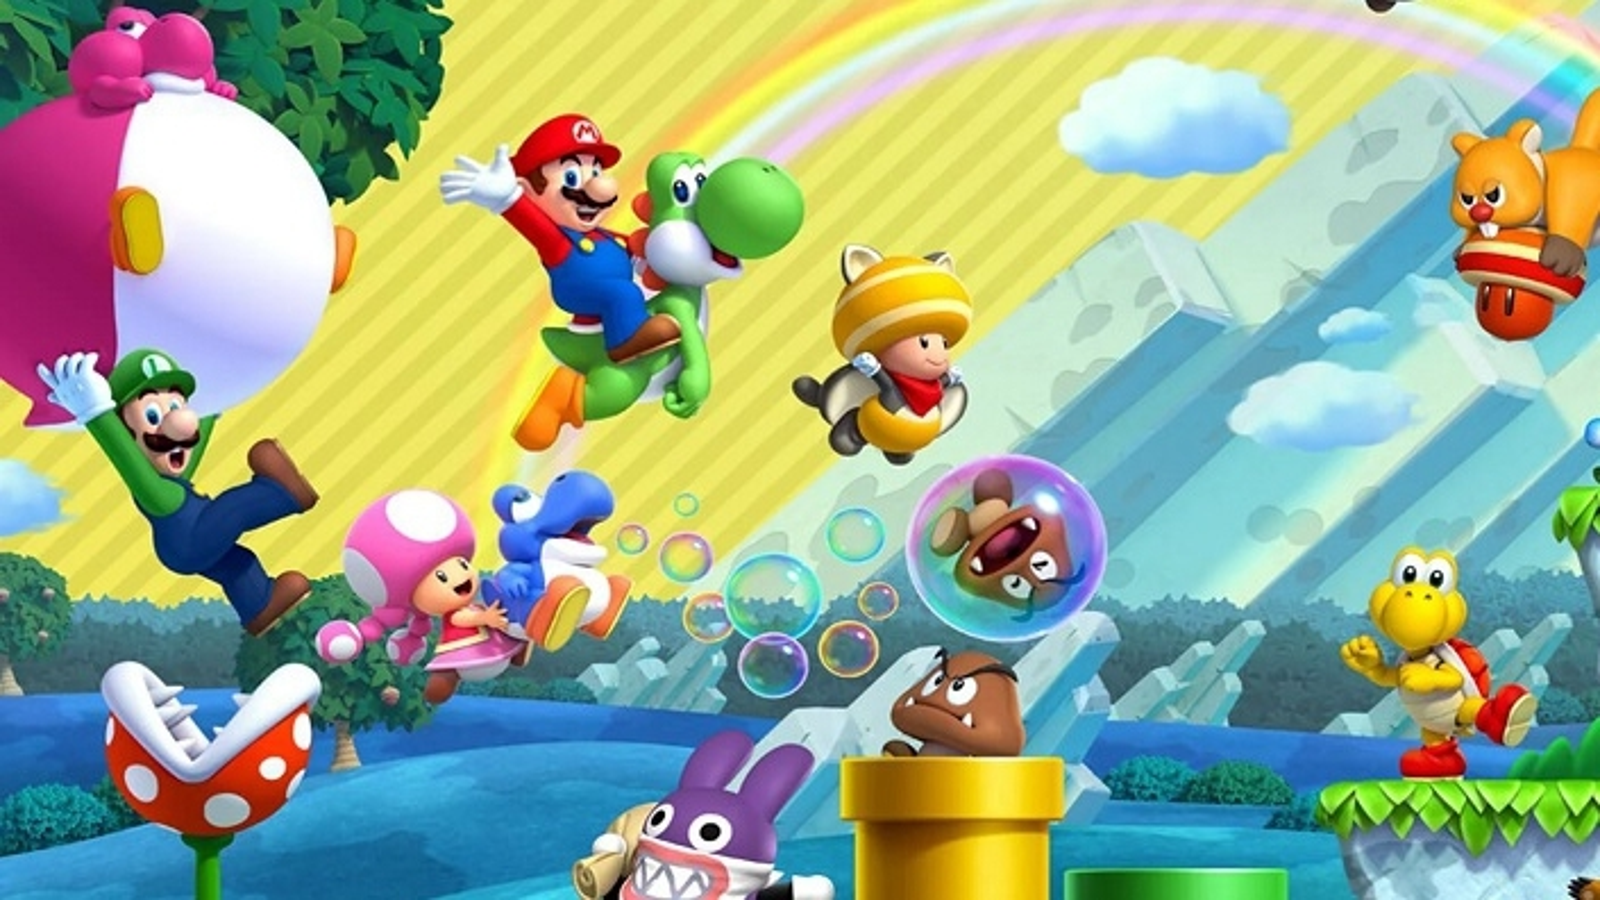 New Super Mario Bros U Deluxe- Nintendo Switch [Digital] 